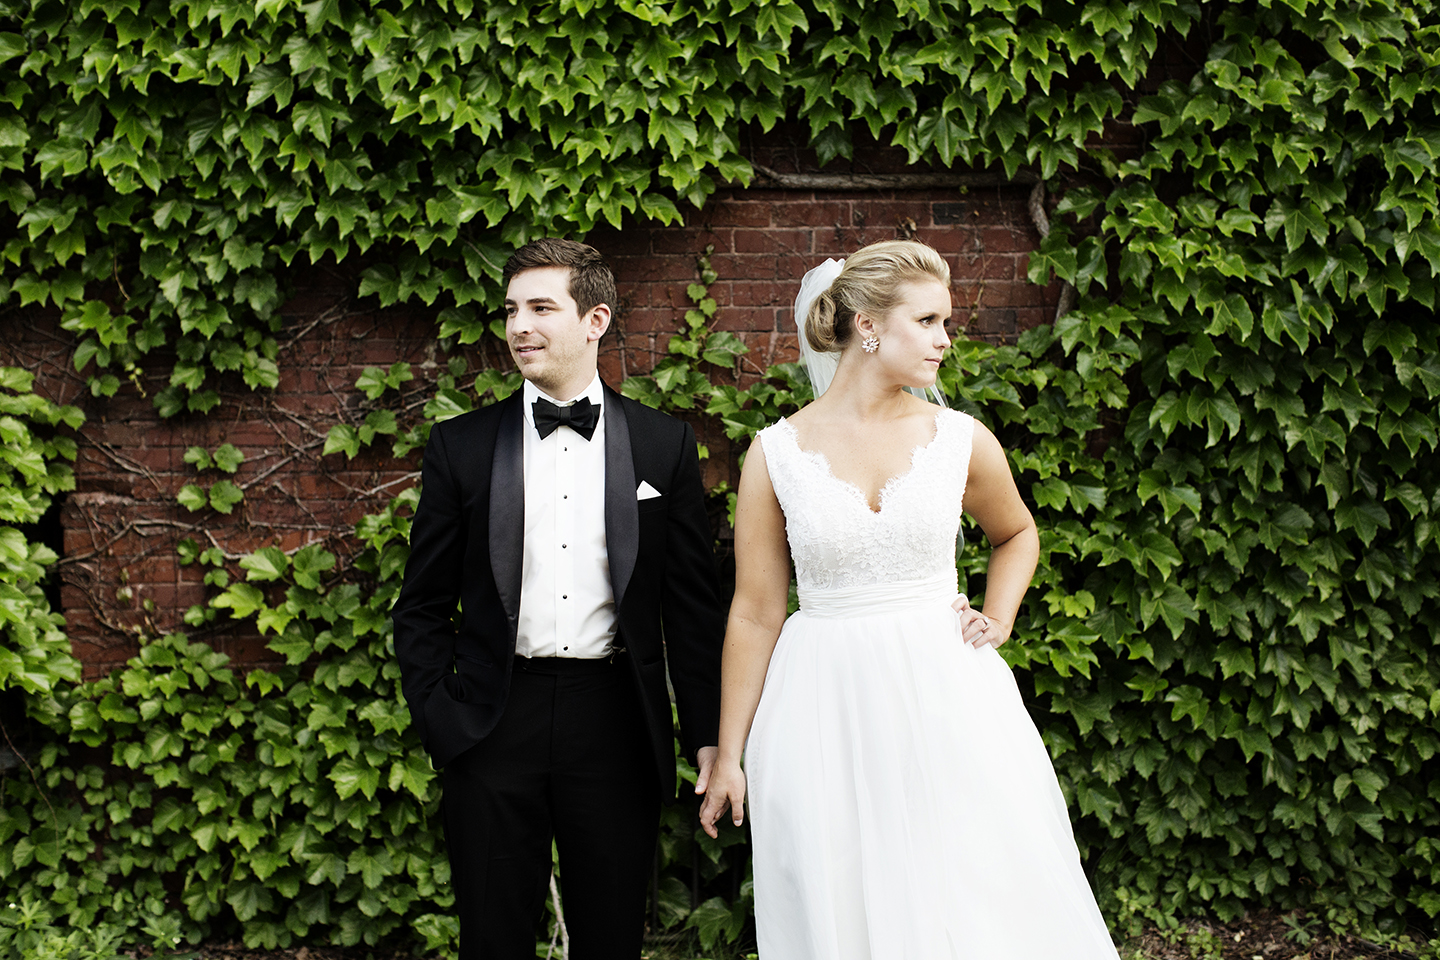 MN Wedding Photographer | Photogen Inc. | Eliesa Johnson | Based in Minneapolis